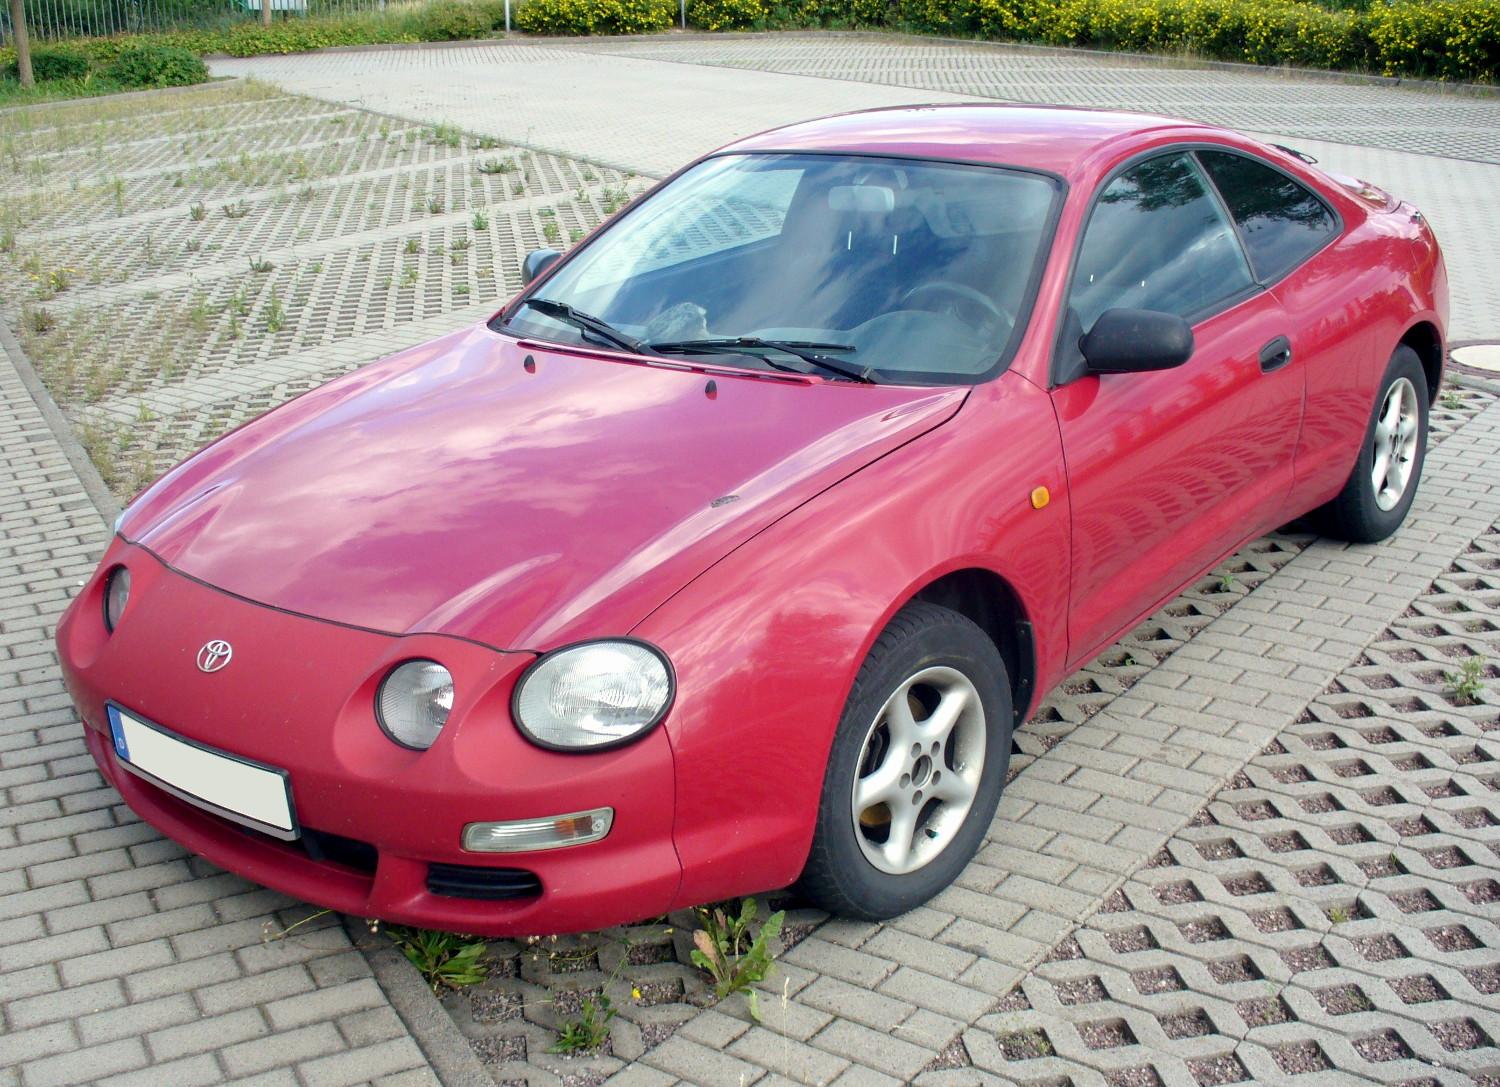 http://upload.wikimedia.org/wikipedia/commons/5/58/Toyota_Celica.JPG